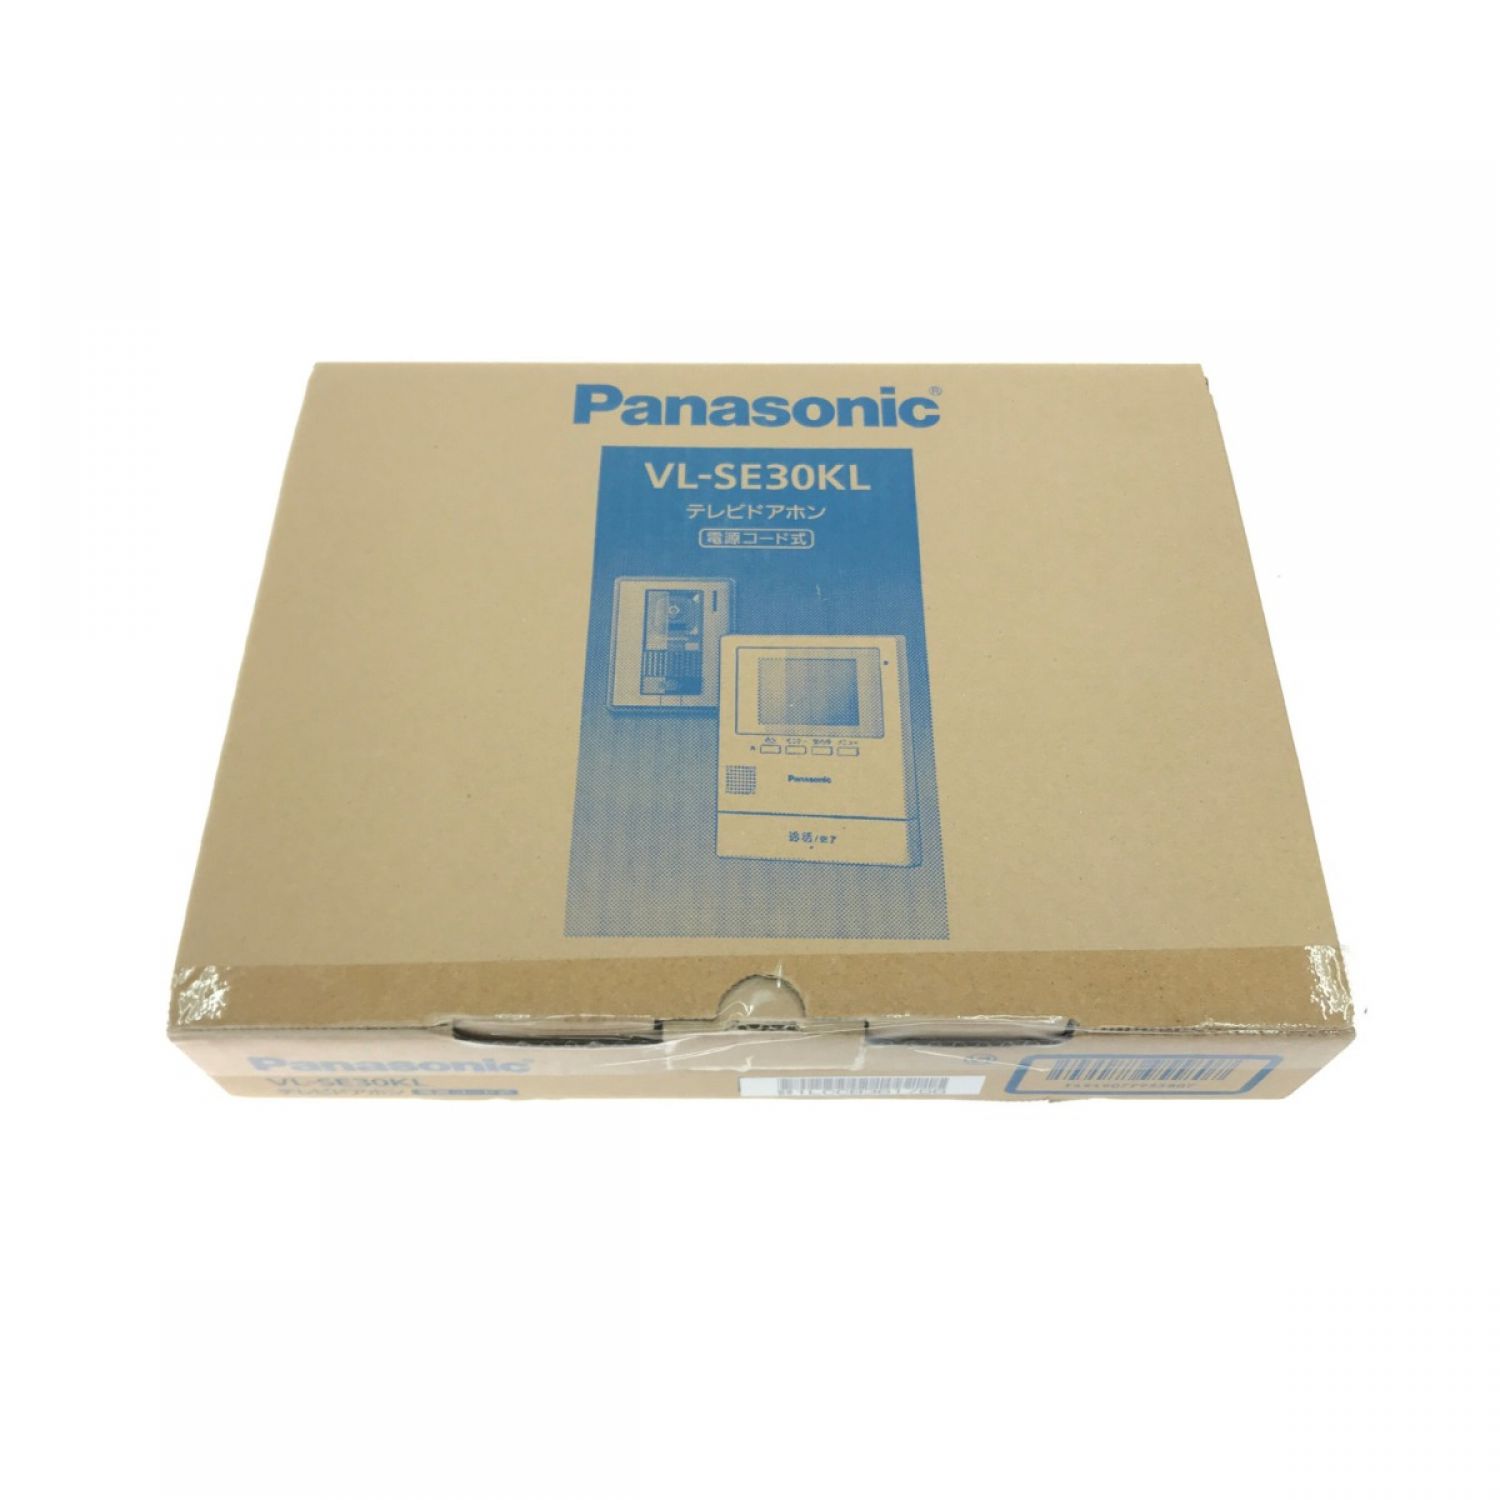 Panasonic ドアホンVL-SE30KL 電源コード式